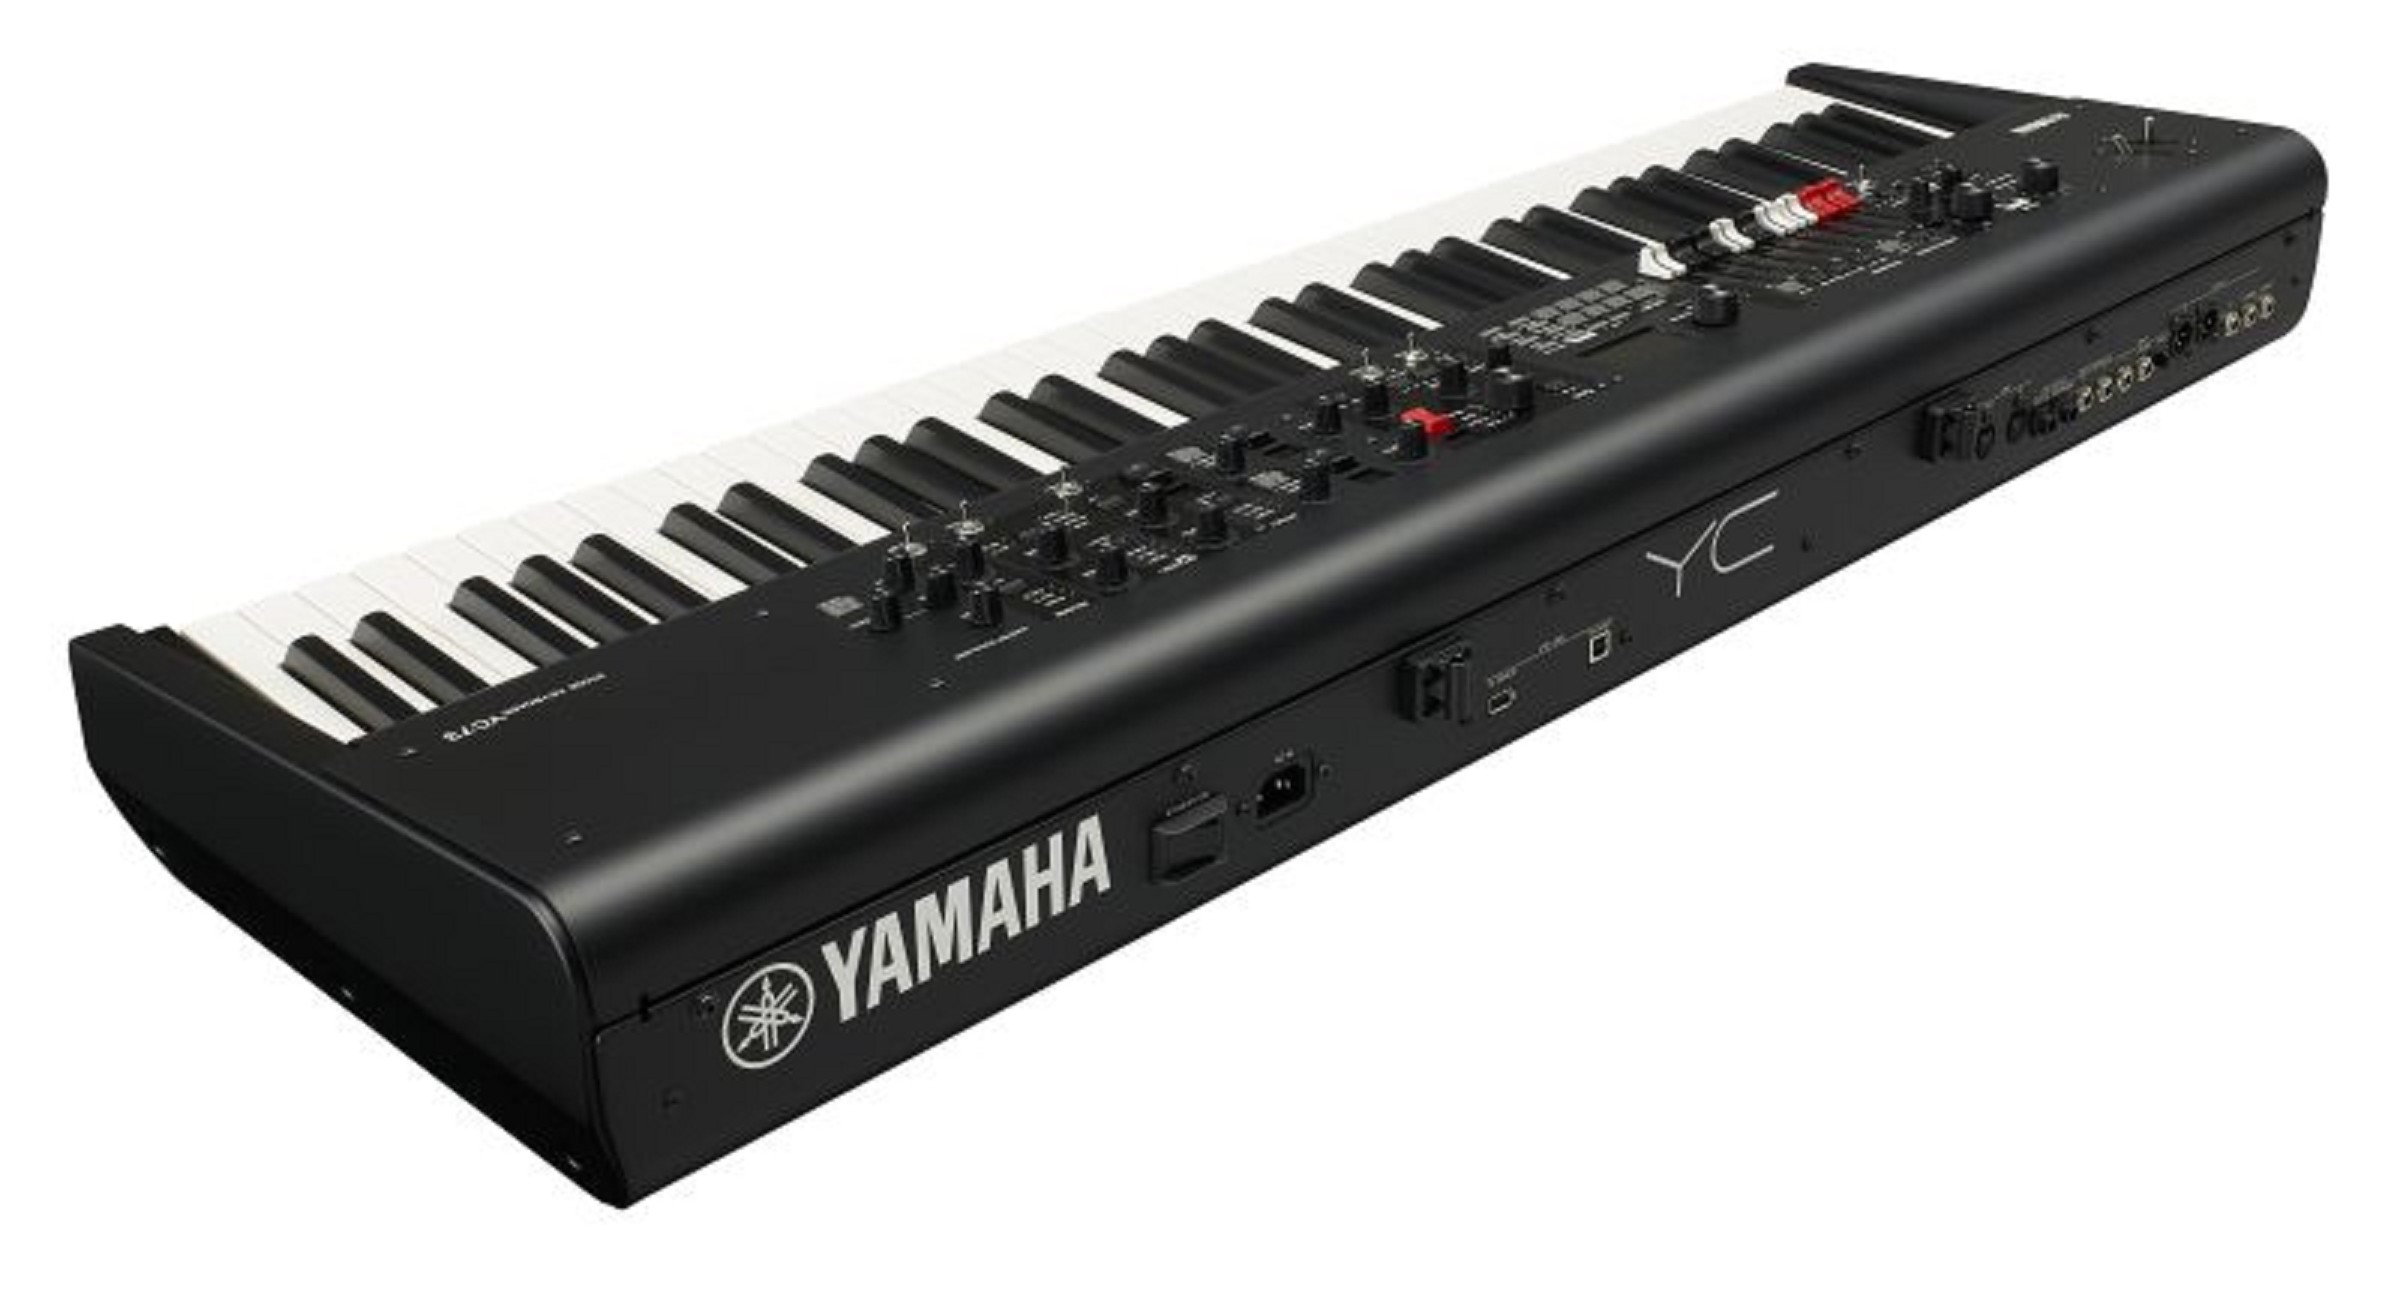 Yamaha YC 73 STAGE KEYBOARD